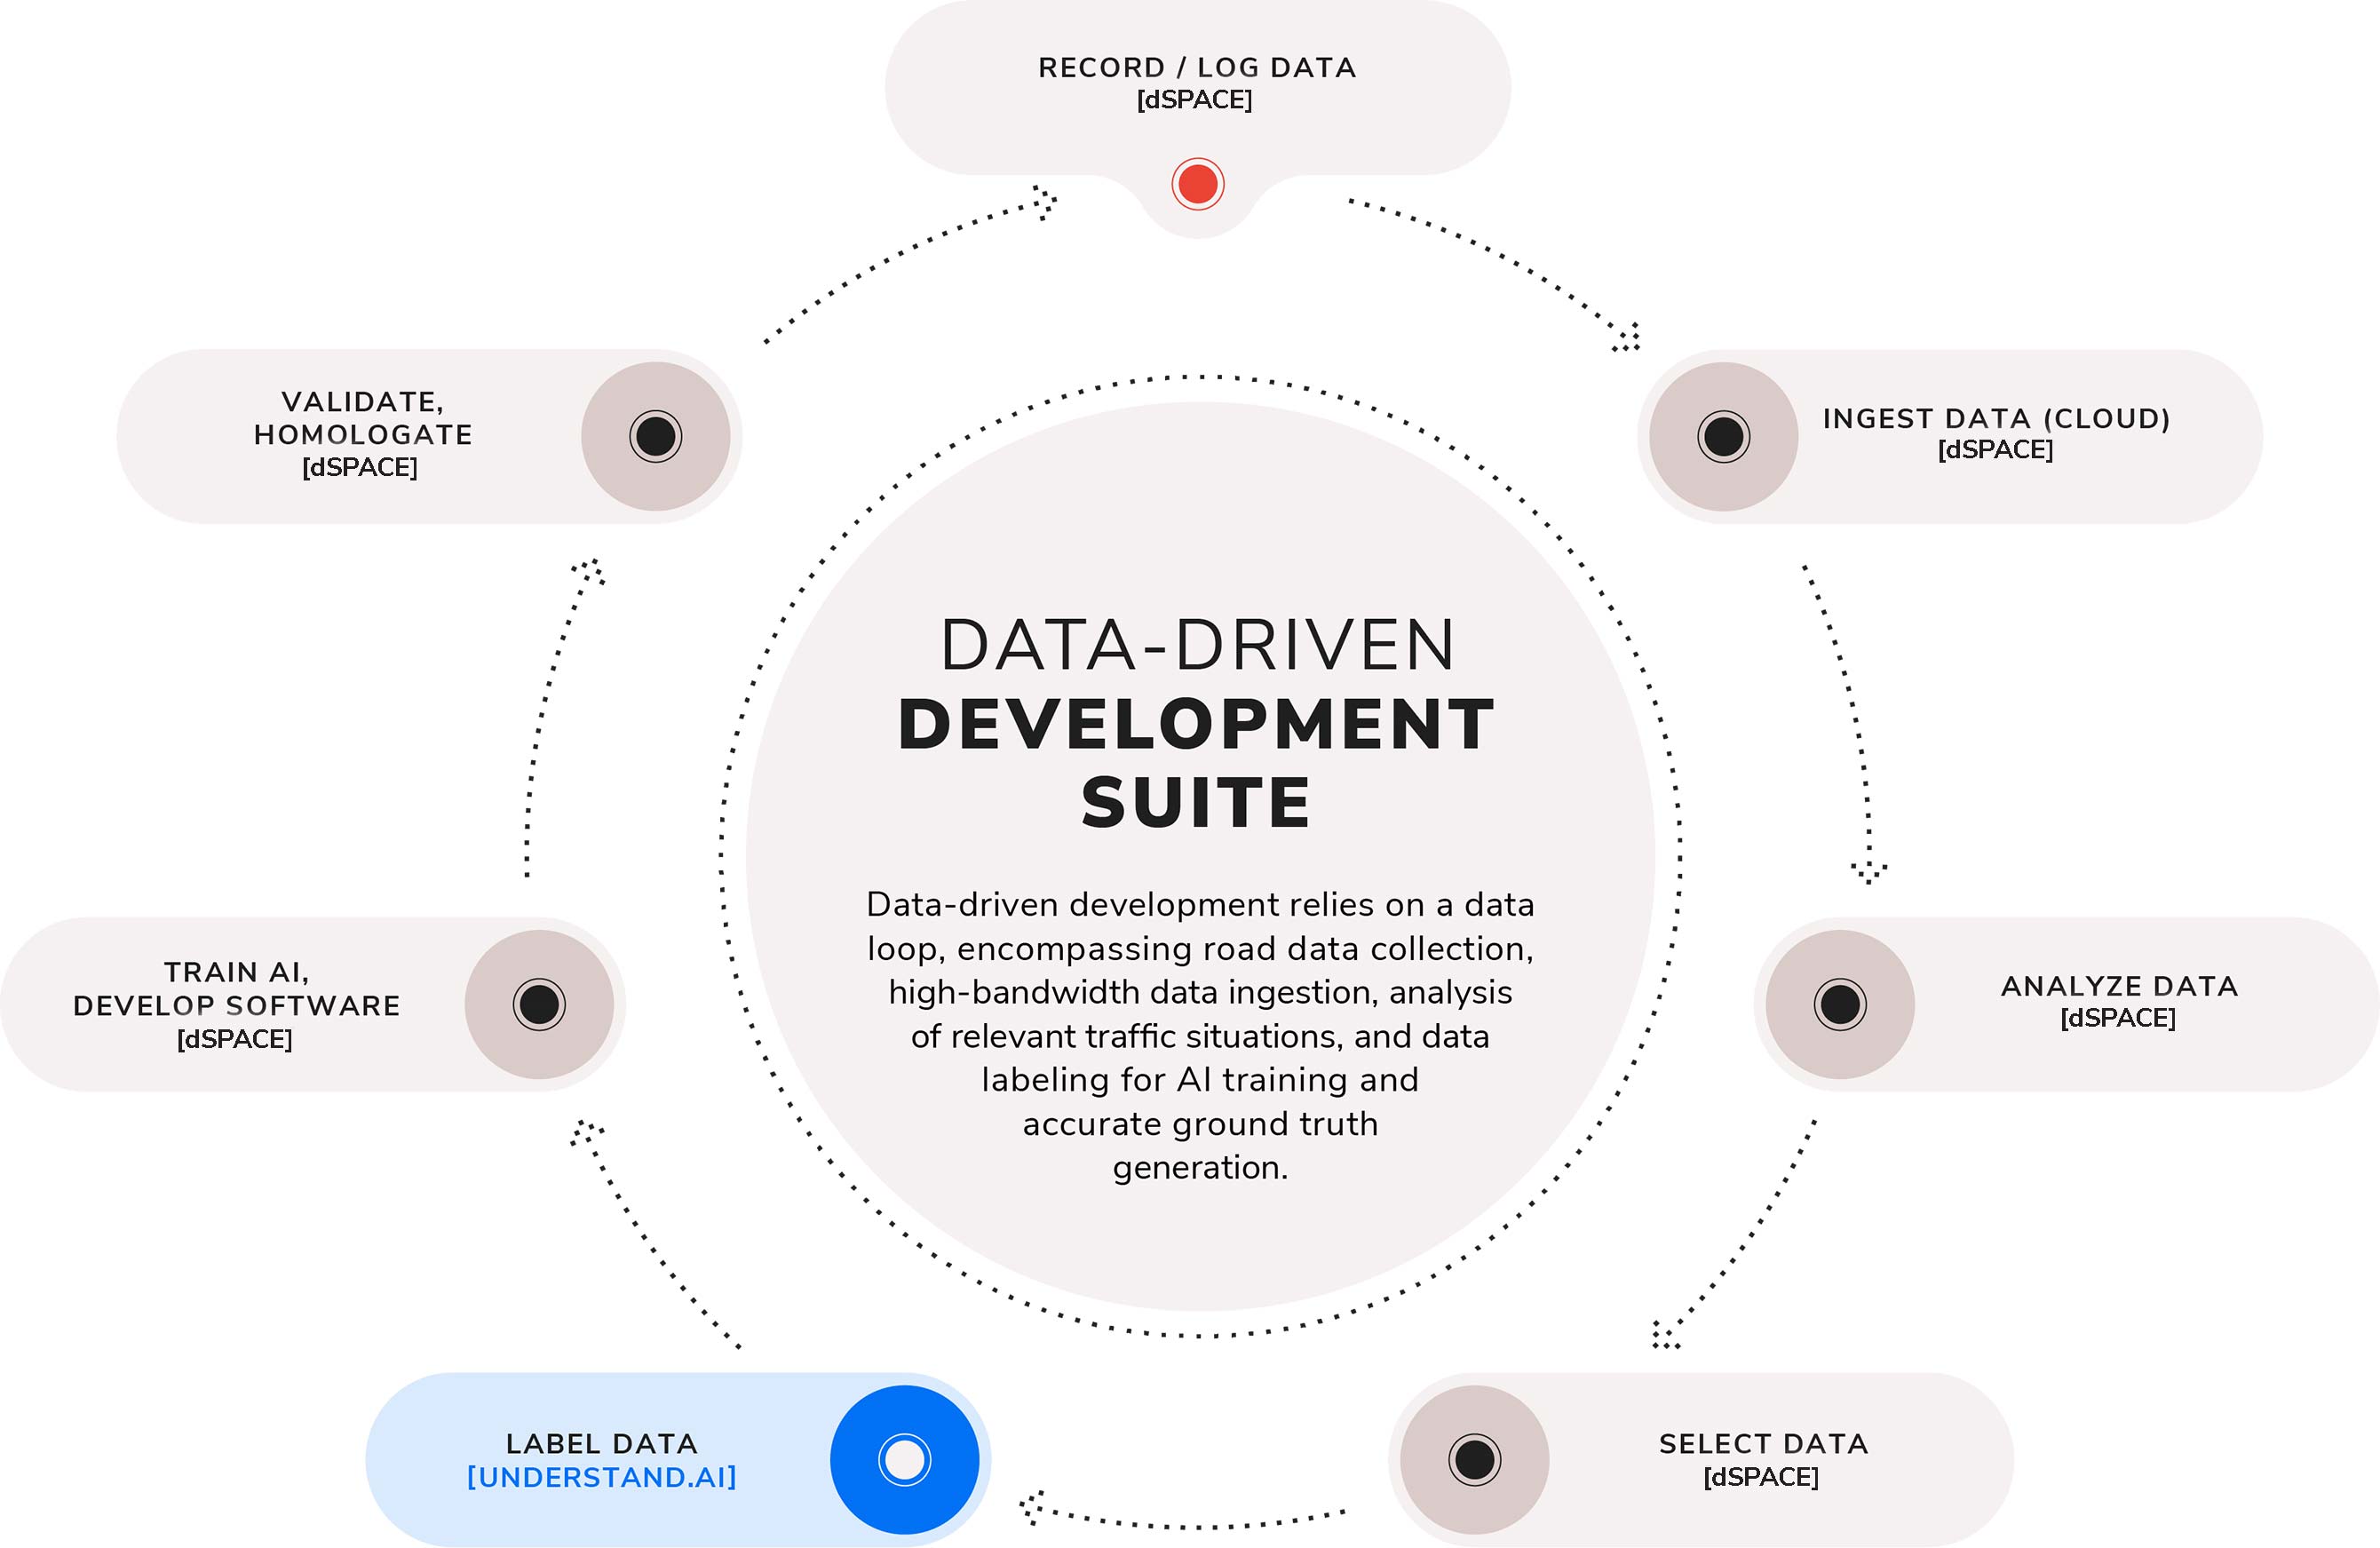 An entire Suite for Data Driven Development